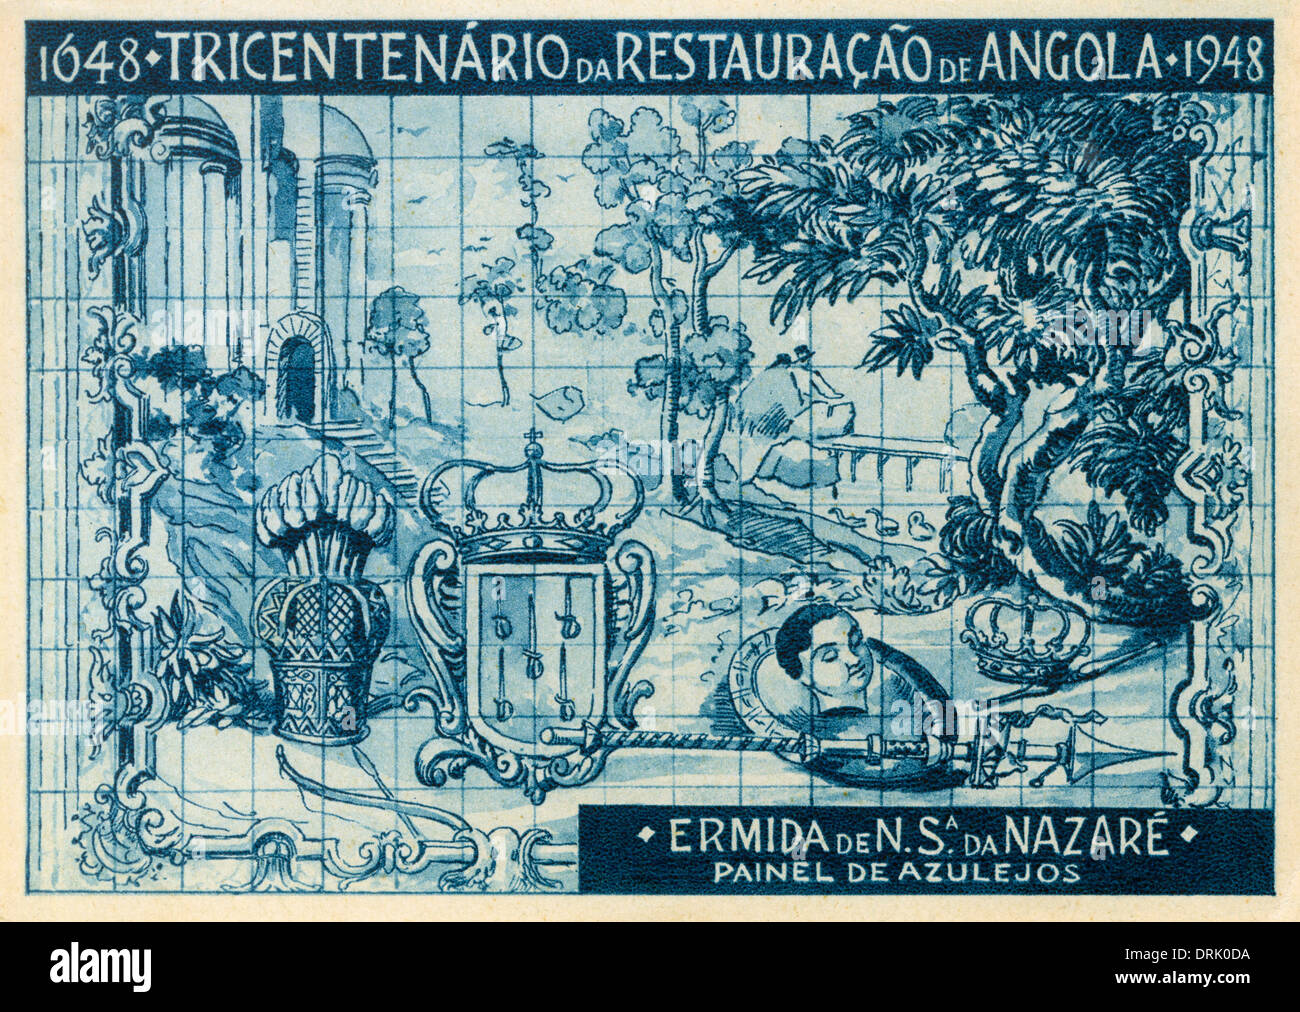 Restaurant Angola, Lisbon, Portugal - 300 year anniversary Stock Photo